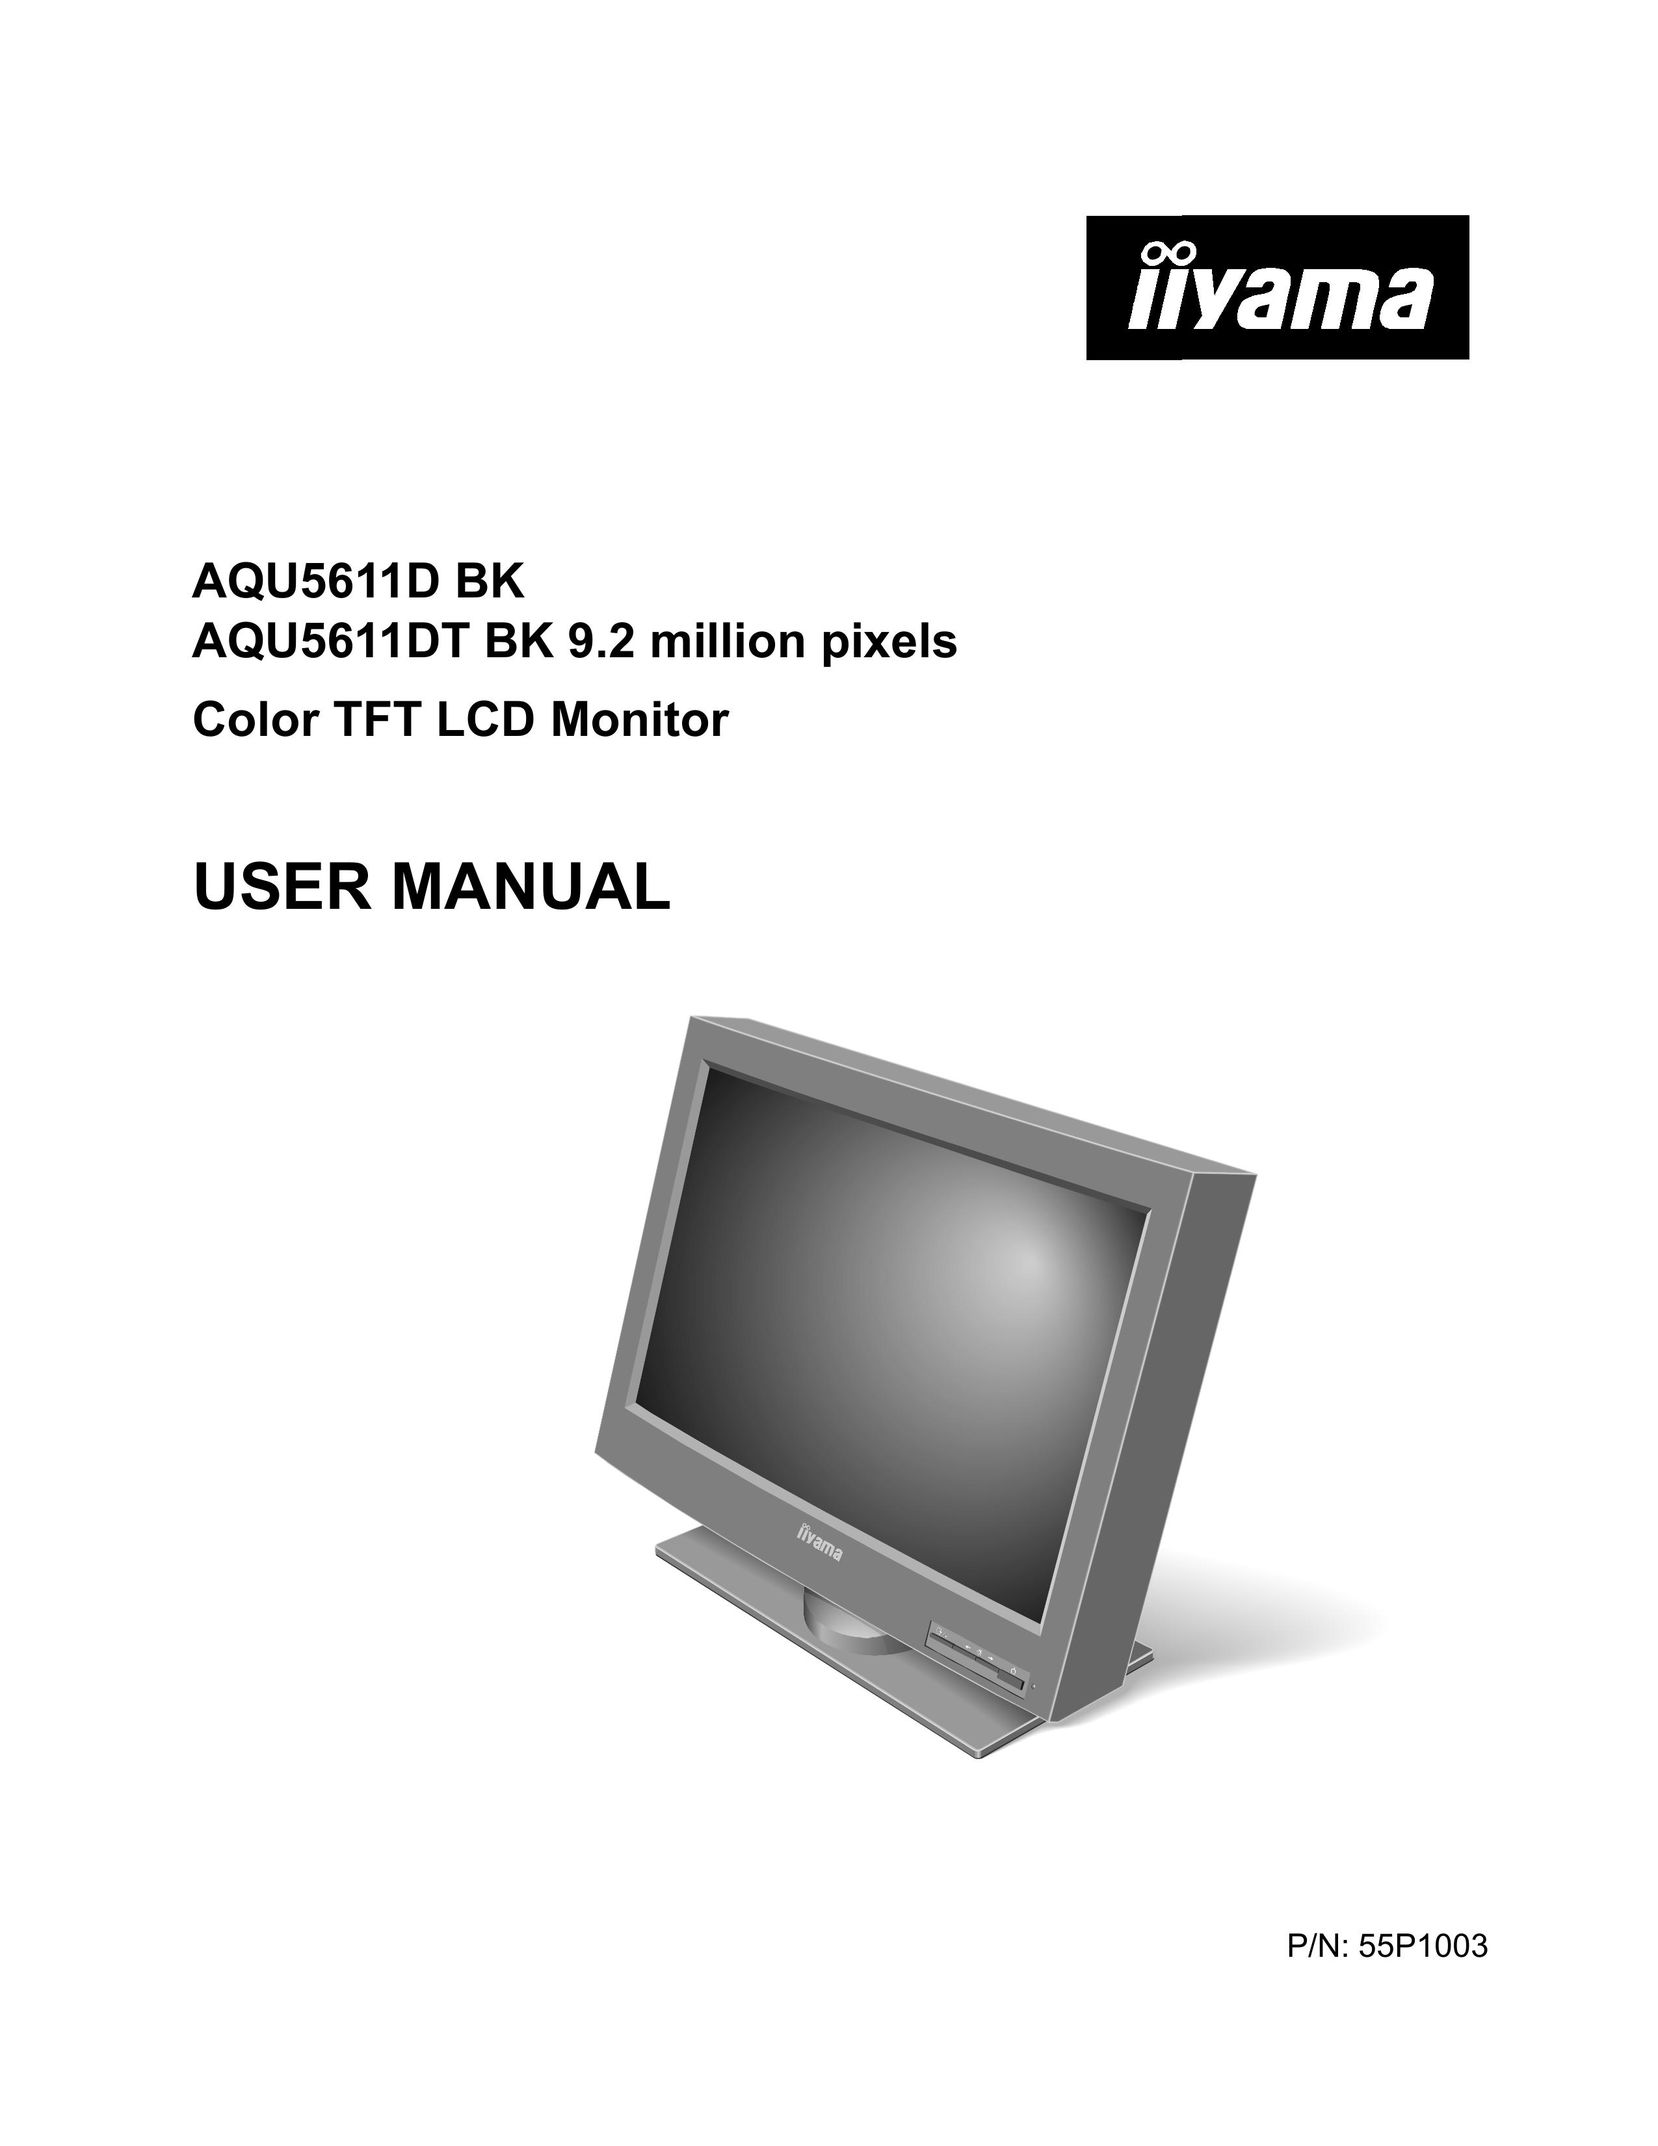 Iiyama AQU5611DTBK Computer Monitor User Manual